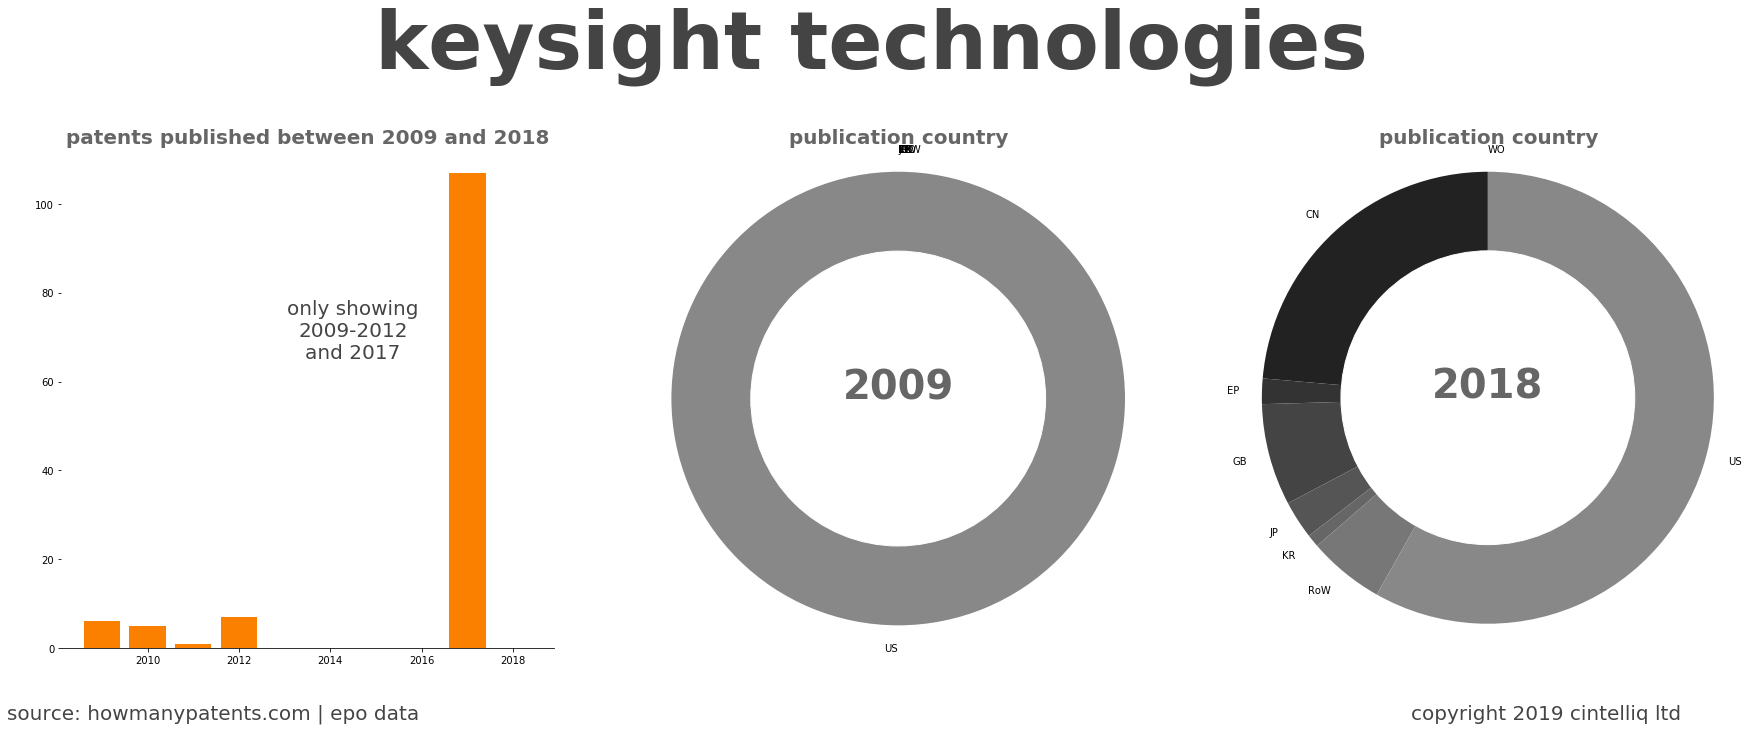 summary of patents for Keysight Technologies